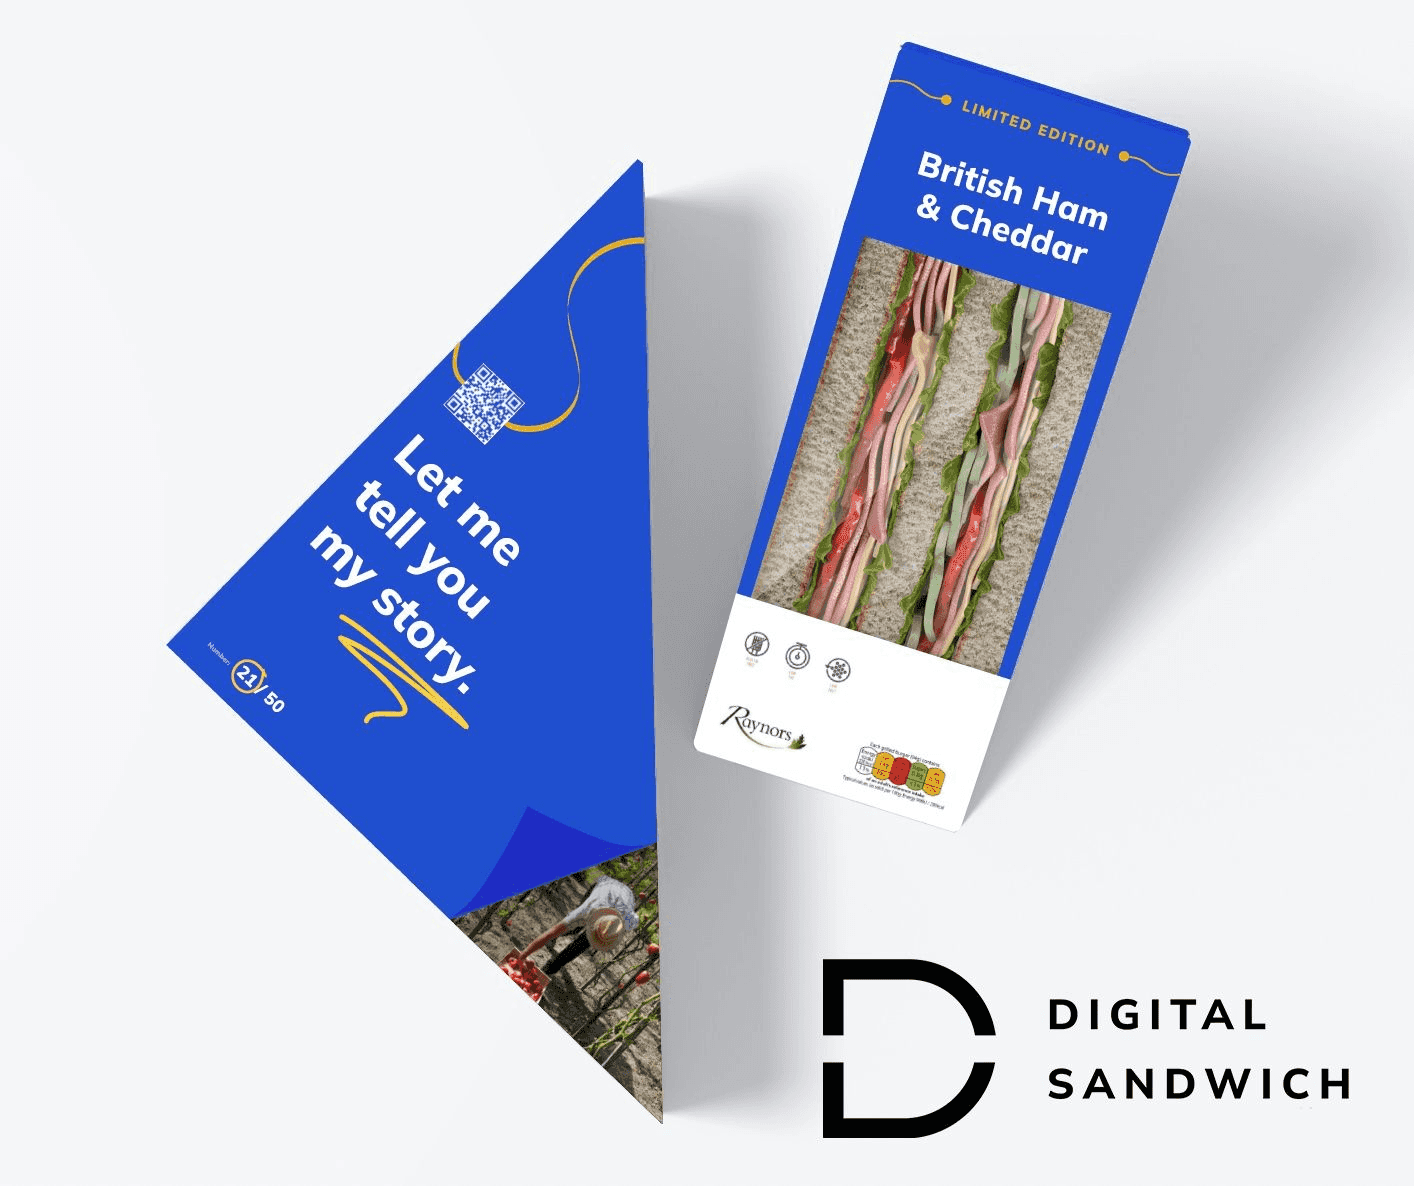 TUVA helps launch the Digital Sandwich